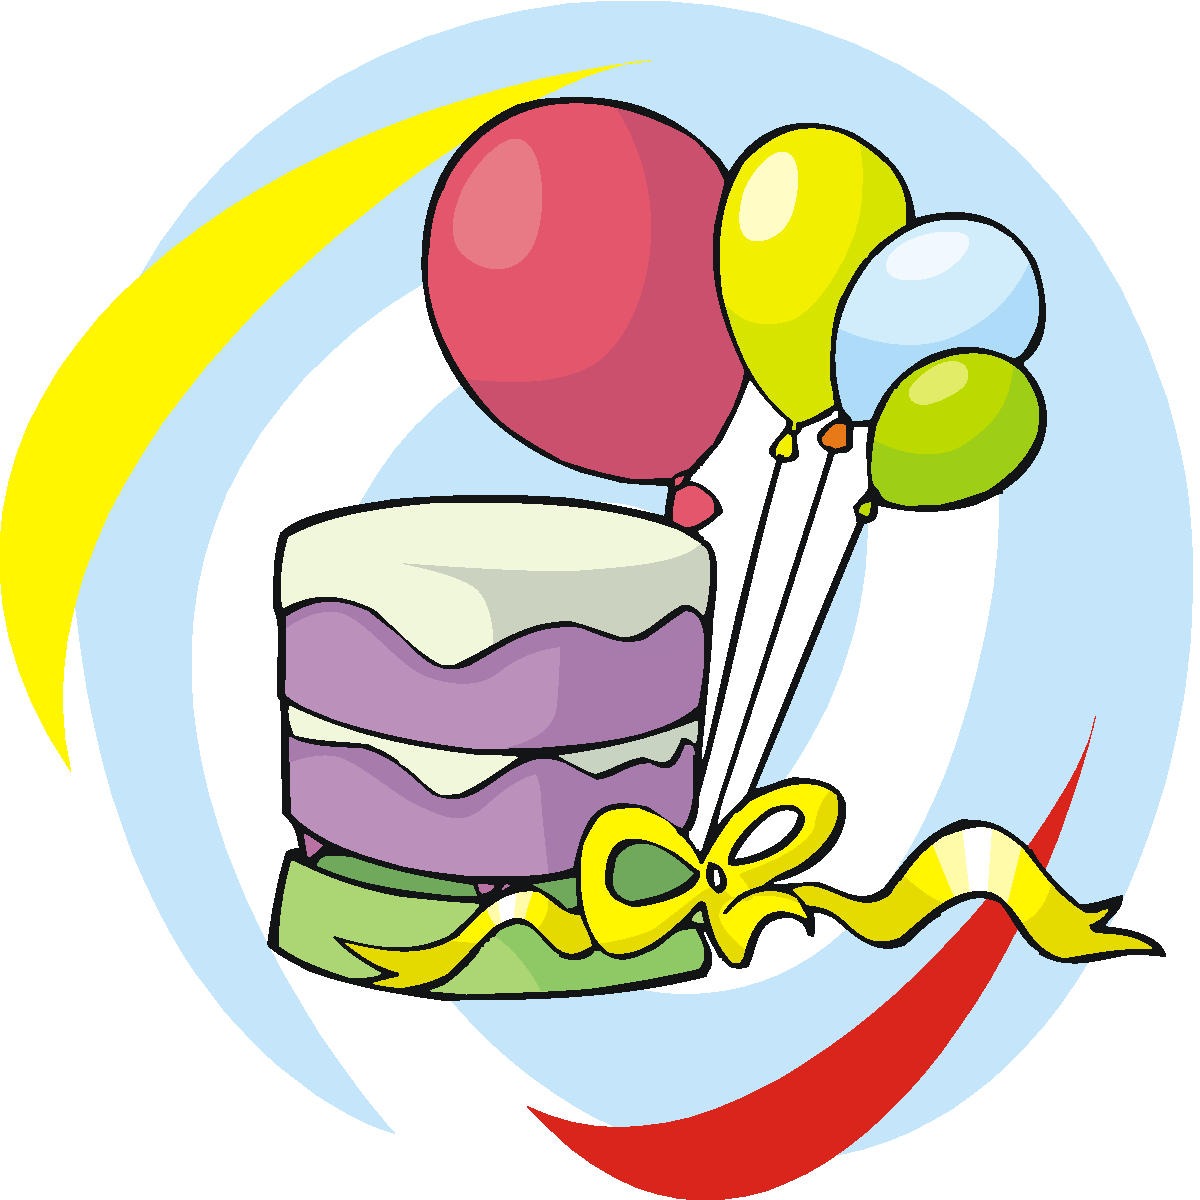 cake clipart balloon